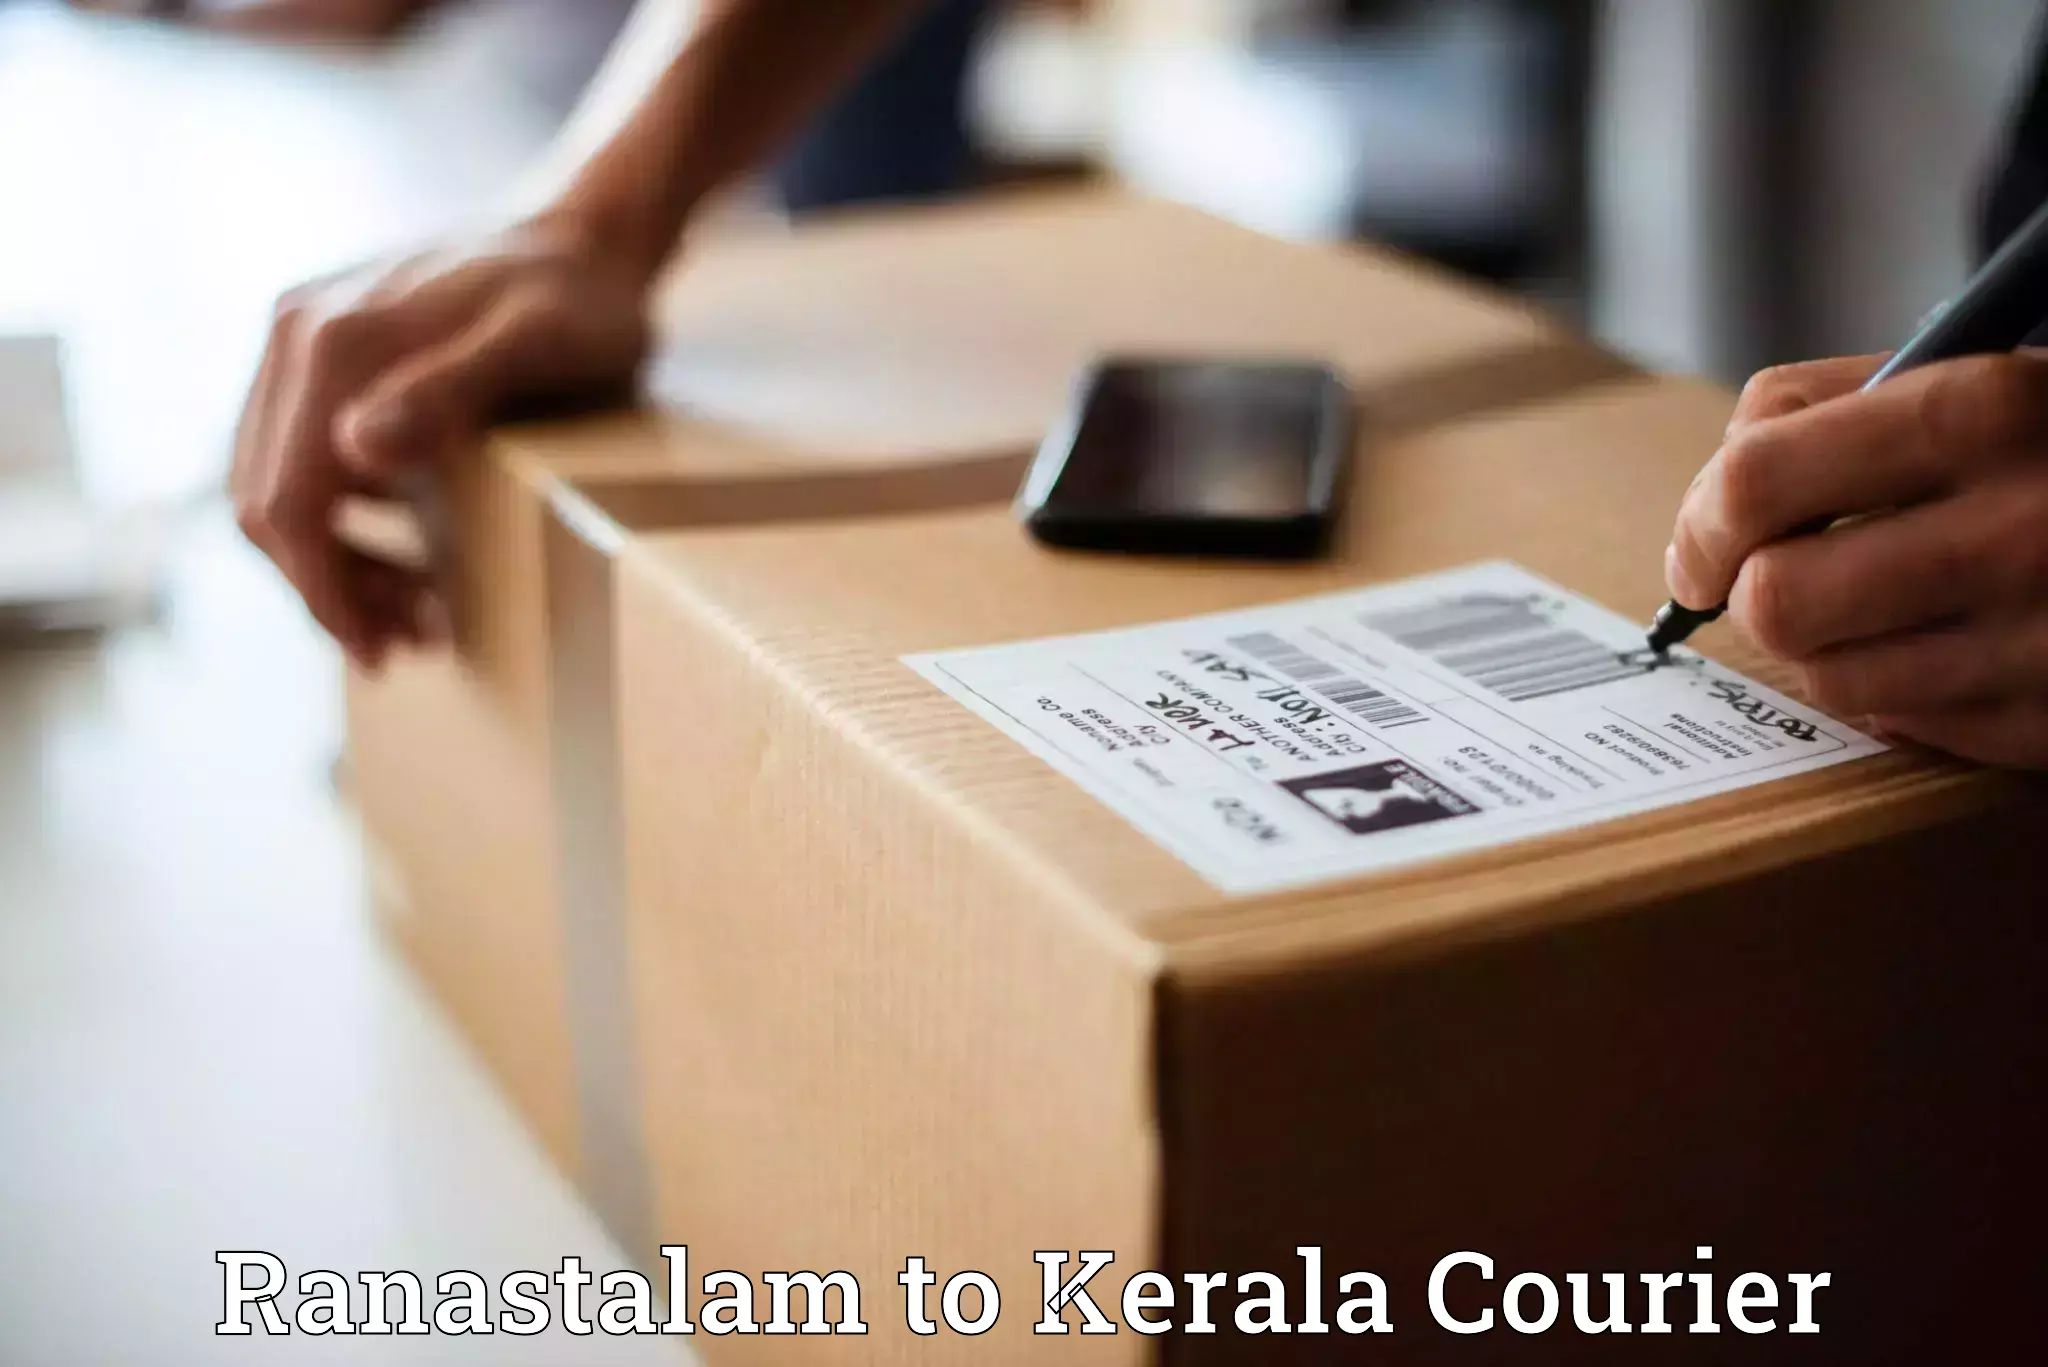 Bulk courier orders Ranastalam to Kallachi